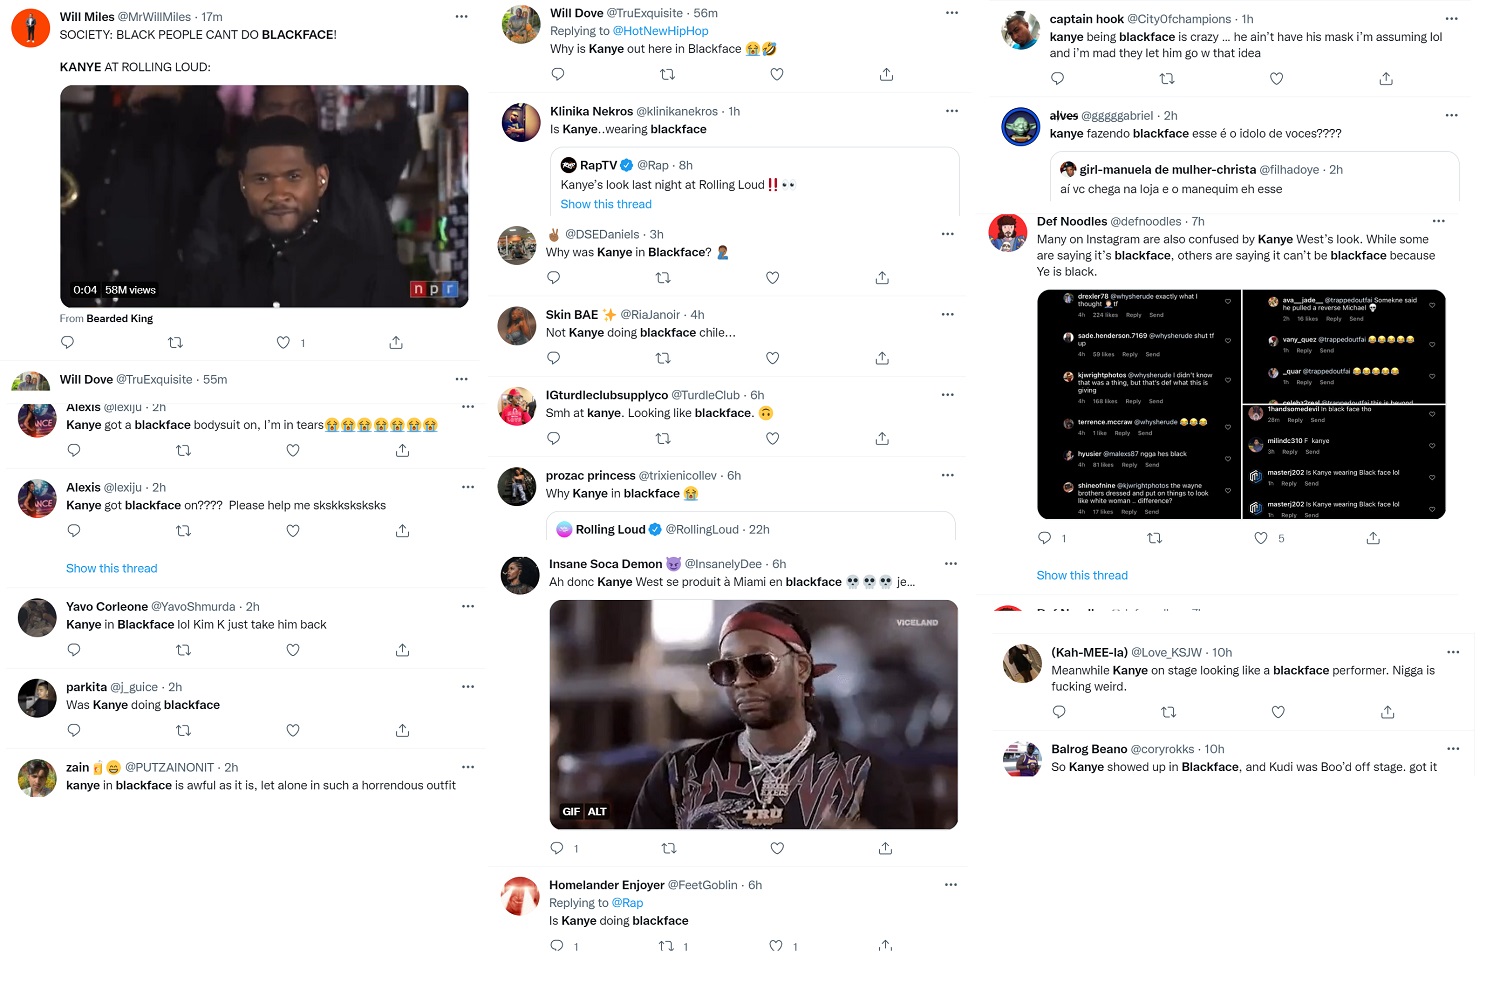 Kanye West gets accused on Twitter of having on blackface